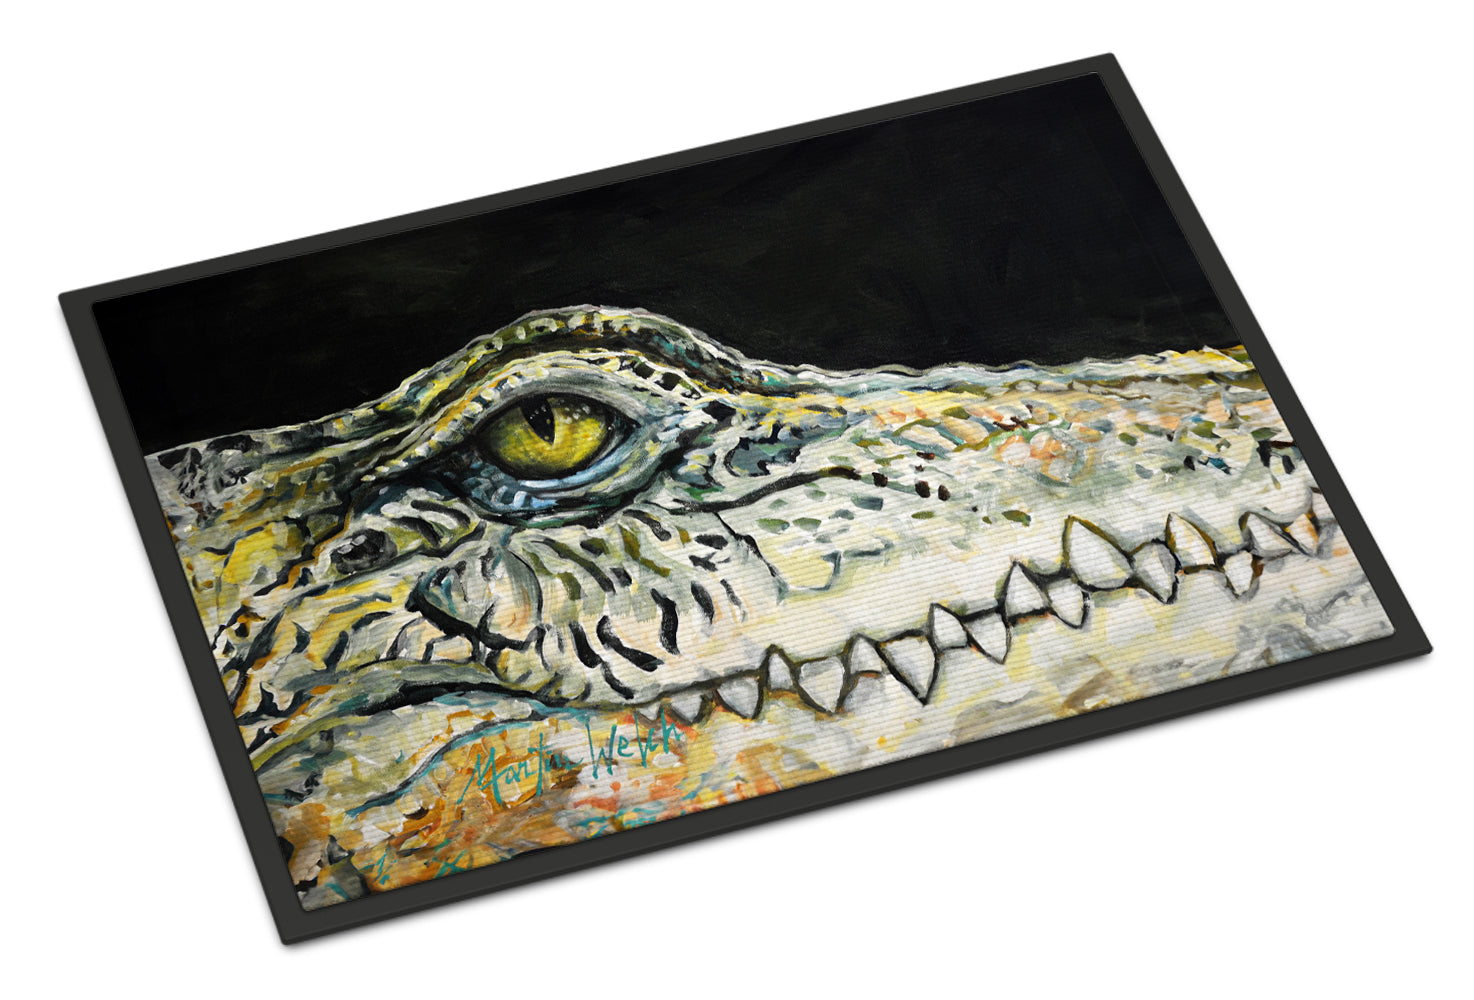 Buy this Bite Me Alligator Doormat